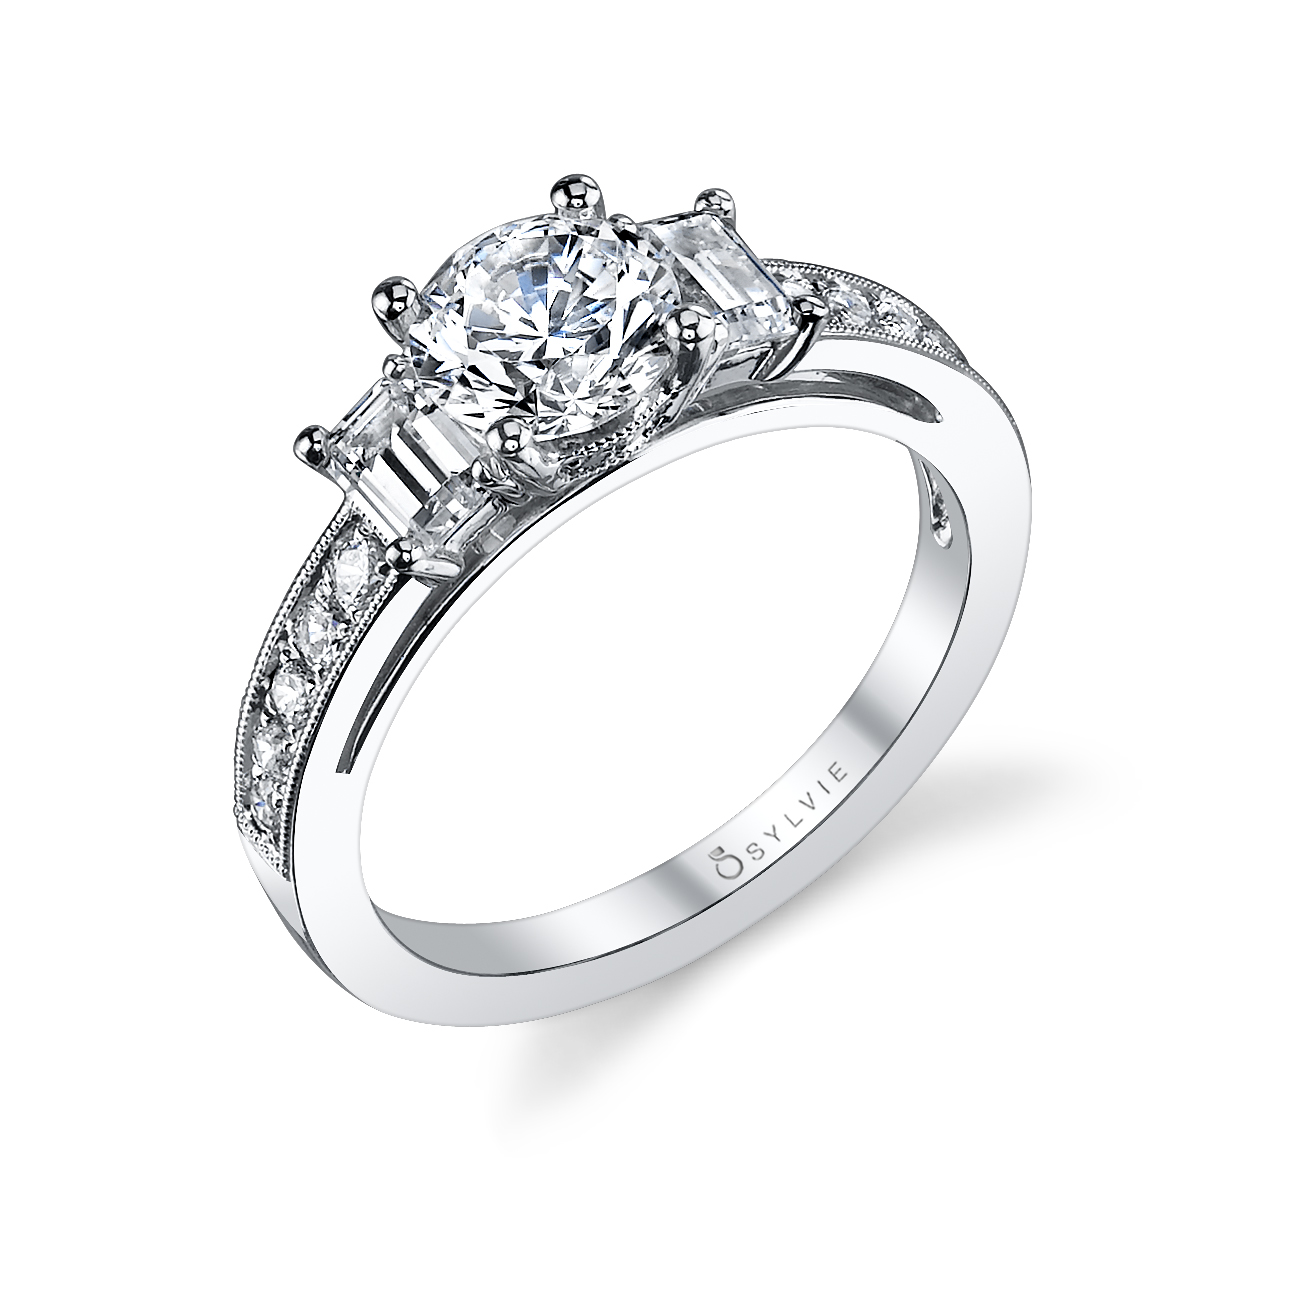 0.50 CT. T.W. Cushion Shaped Diamond Engagement Ring in 14 Karat White Gold  - Sam's Club